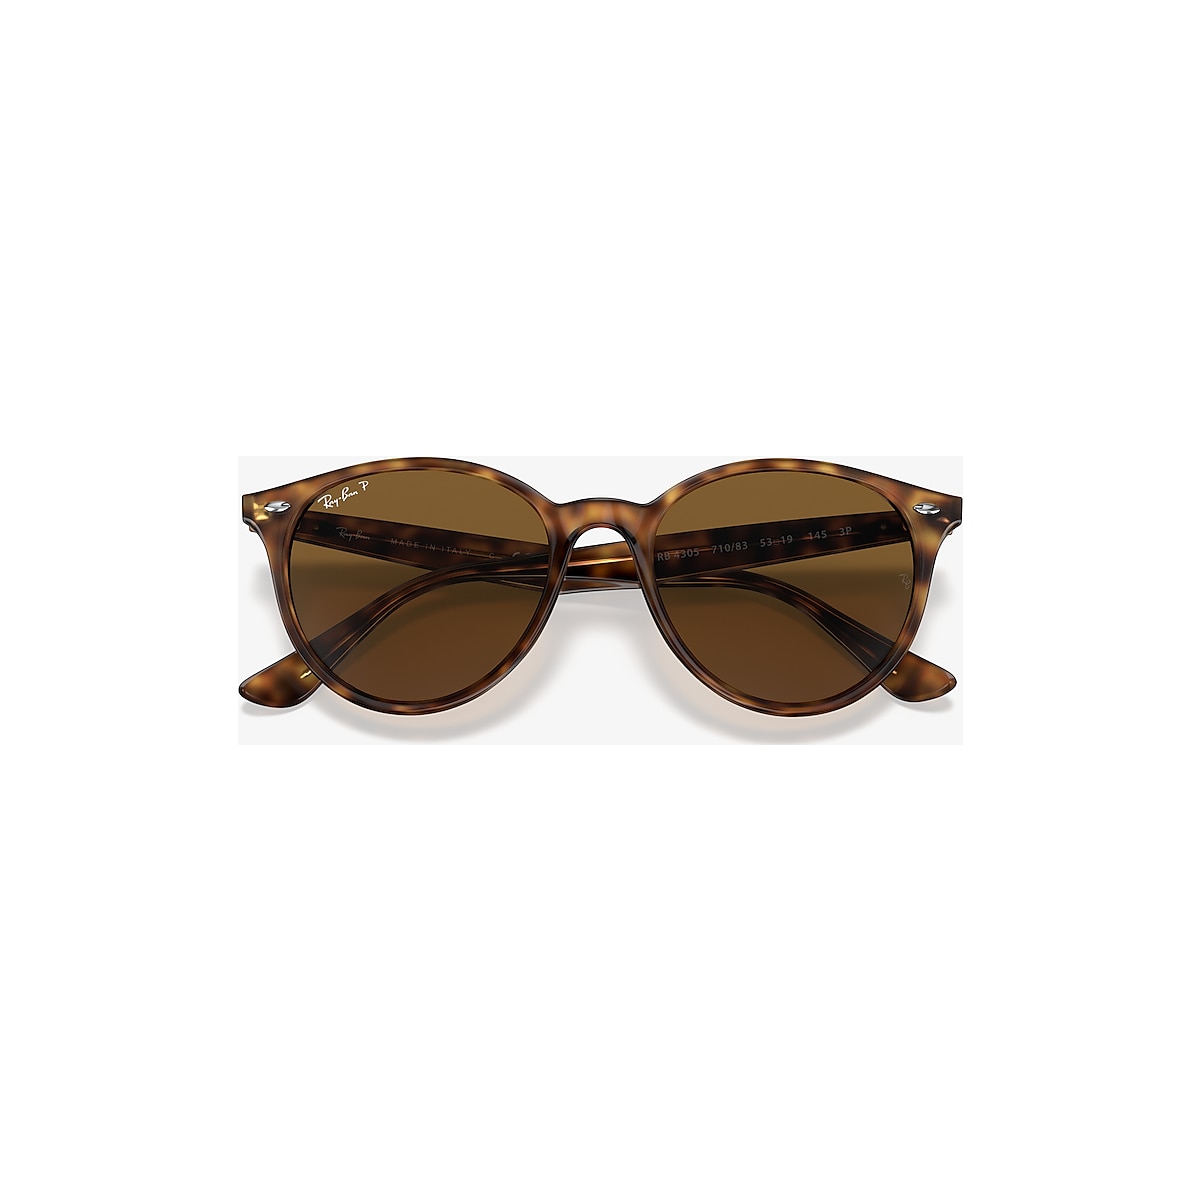 Ray-Ban RB4305 53 Brown & Light Havana Polarized Sunglasses